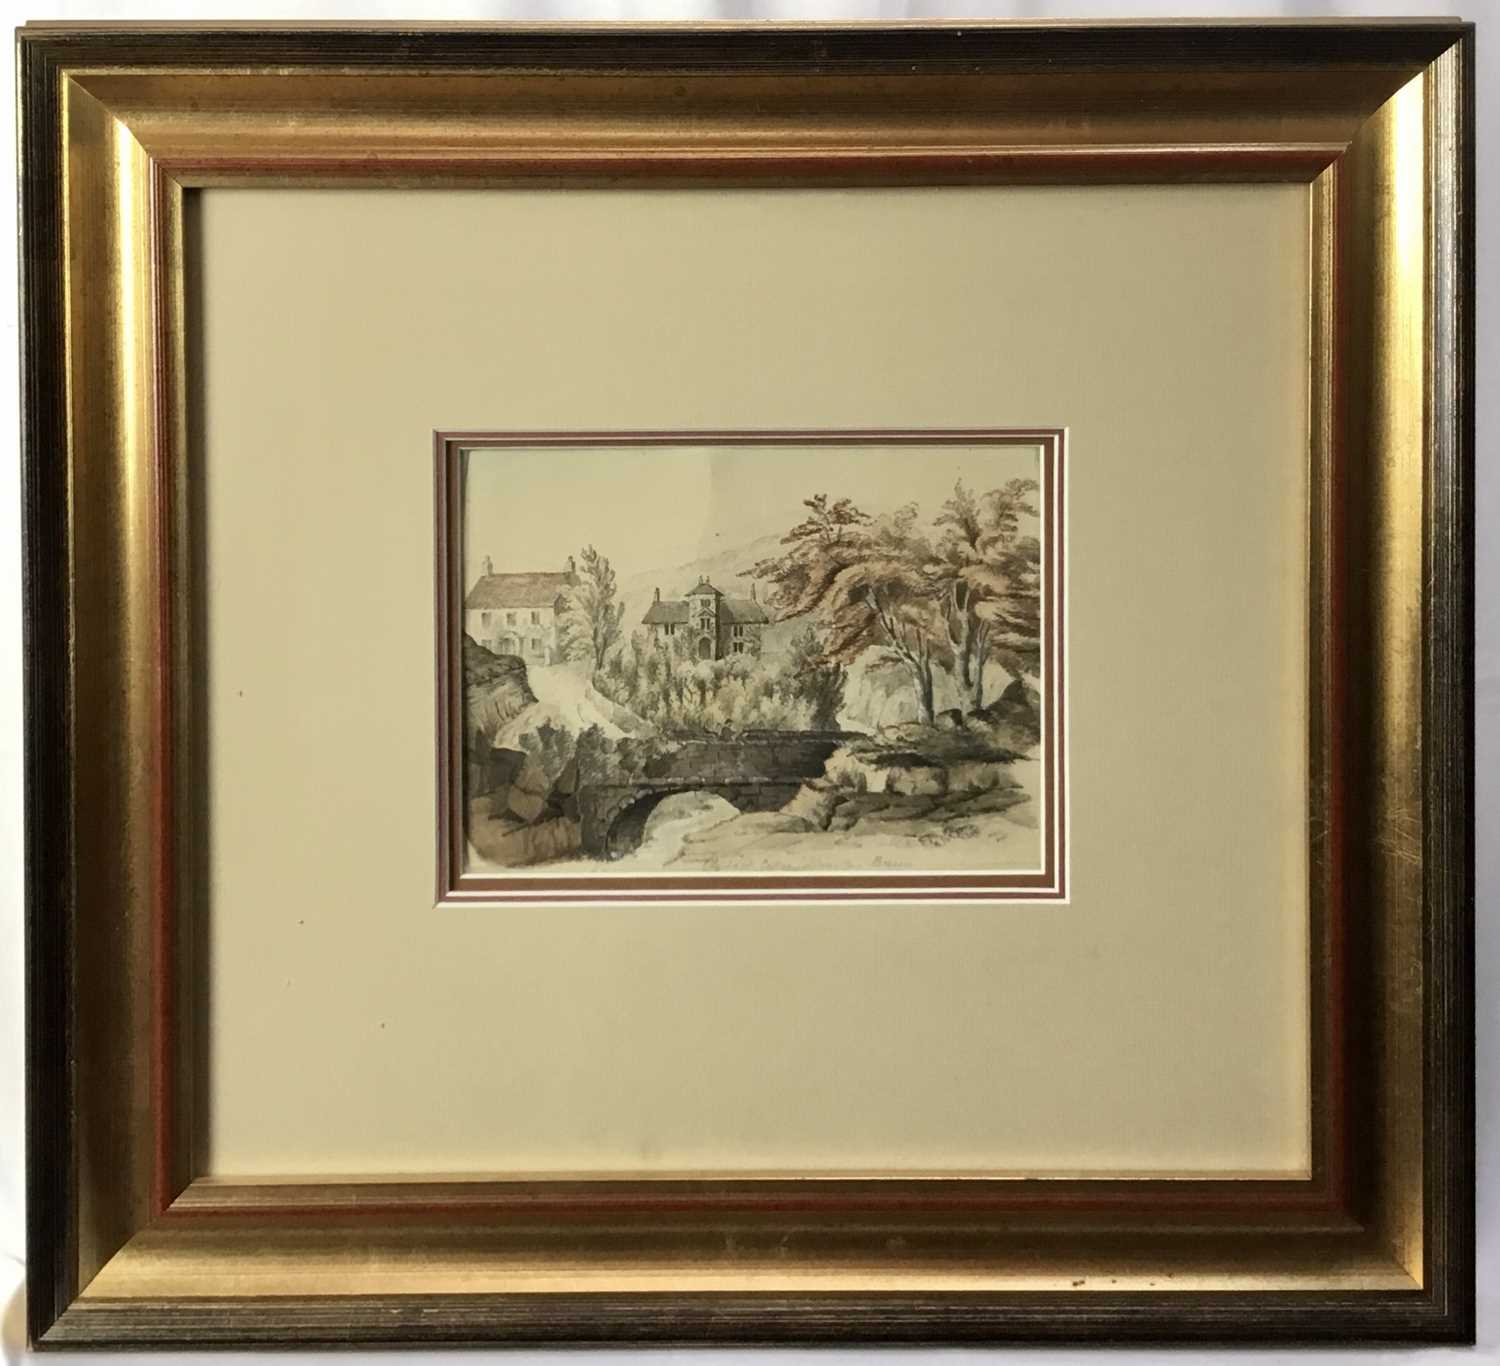 Lot 6 - English School, 19th century, pencil and watercolour - Llanelly, Brecon, inscribed, 16cm x 22cm, in glazed frame